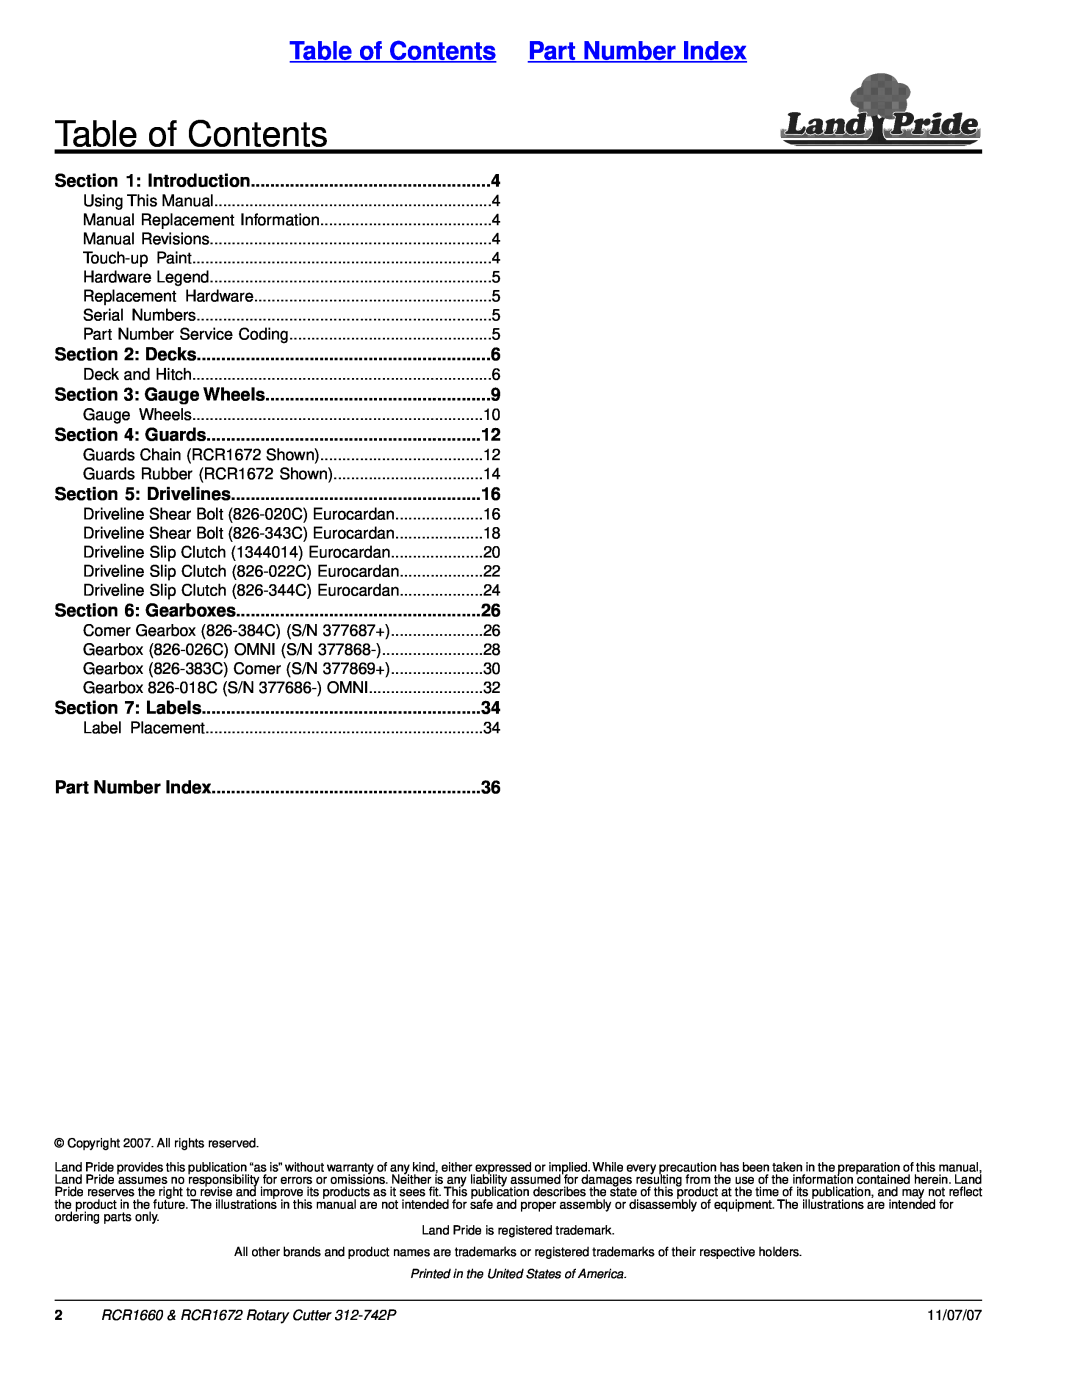 Land Pride RCR1660 Table of Contents Part Number Index, Introduction, Decks, Gauge Wheels, Guards, Drivelines, Labels 